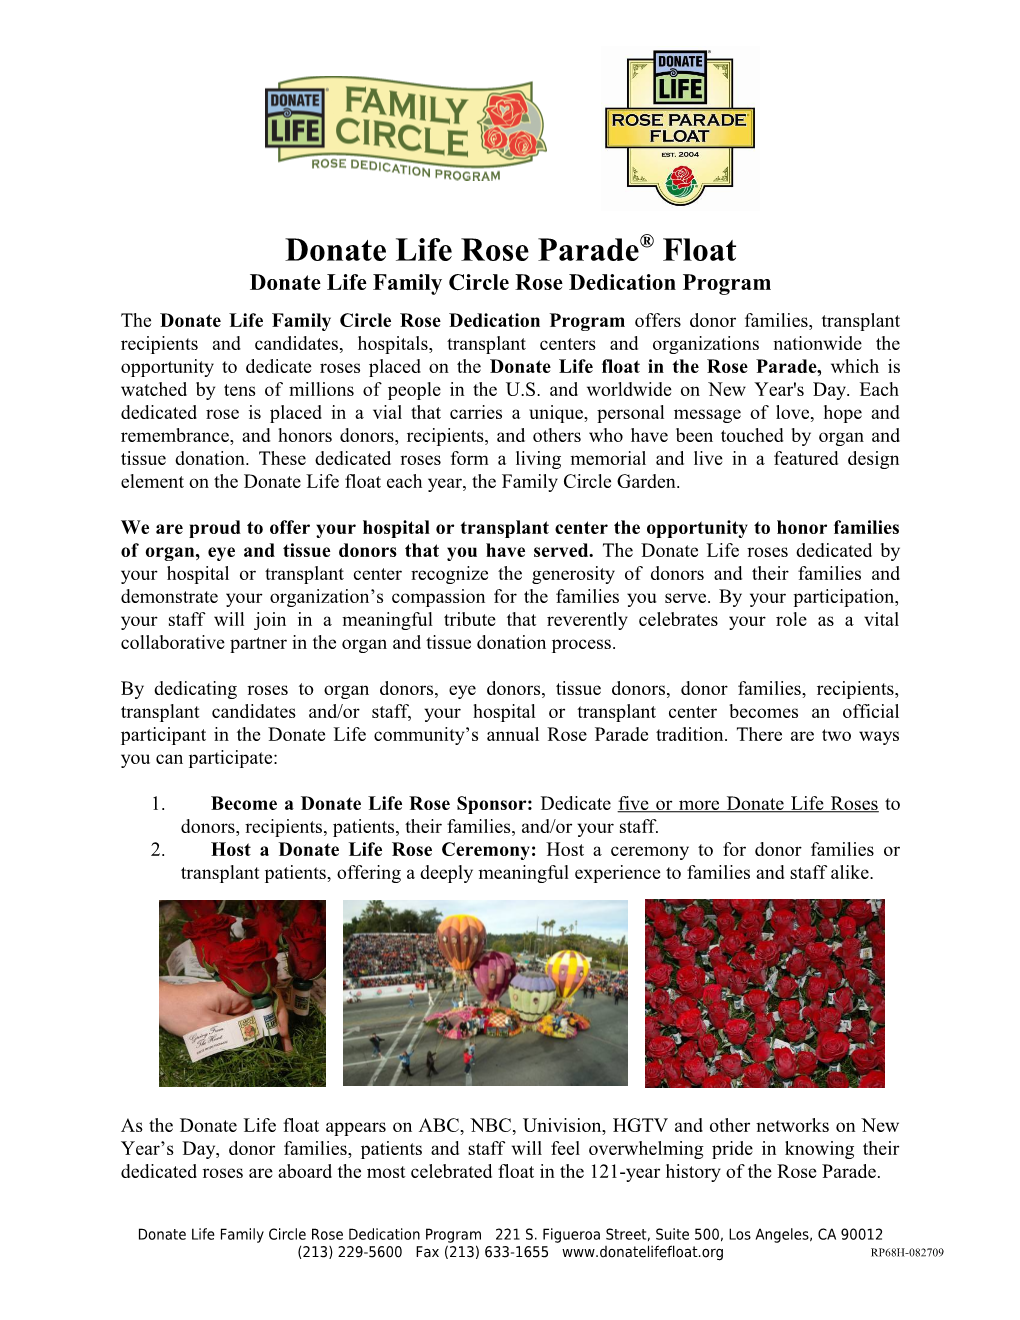 Donate Life Family Circle Rose Dedication Program